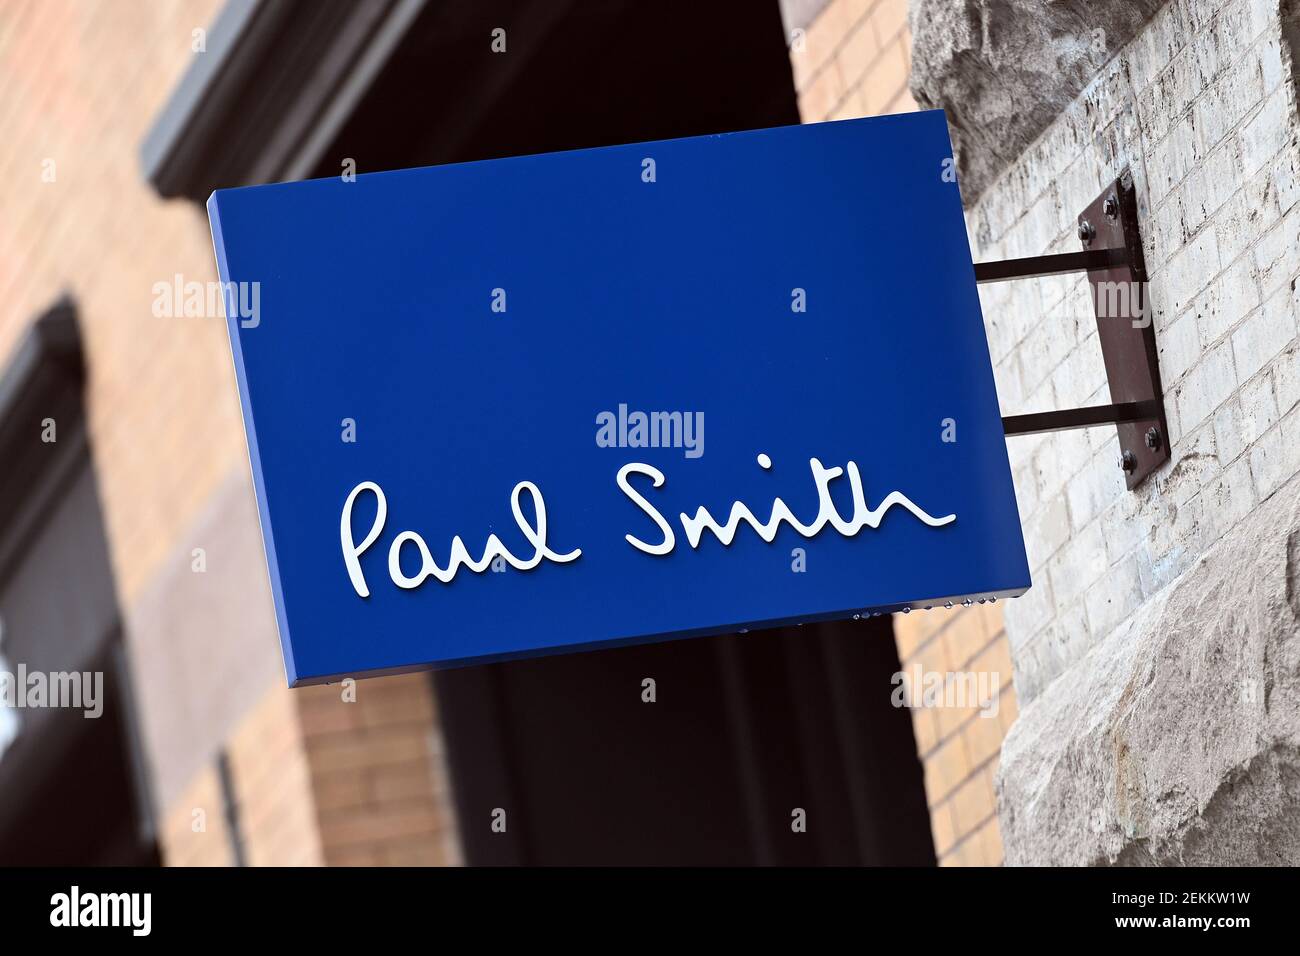 New York, USA. 23rd Feb, 2021. UK luxury fashion brand Paul Smith logo at  its retail store in the Soho neighborhood of New York, NY, February 23,  2021. British and Italian Fashion